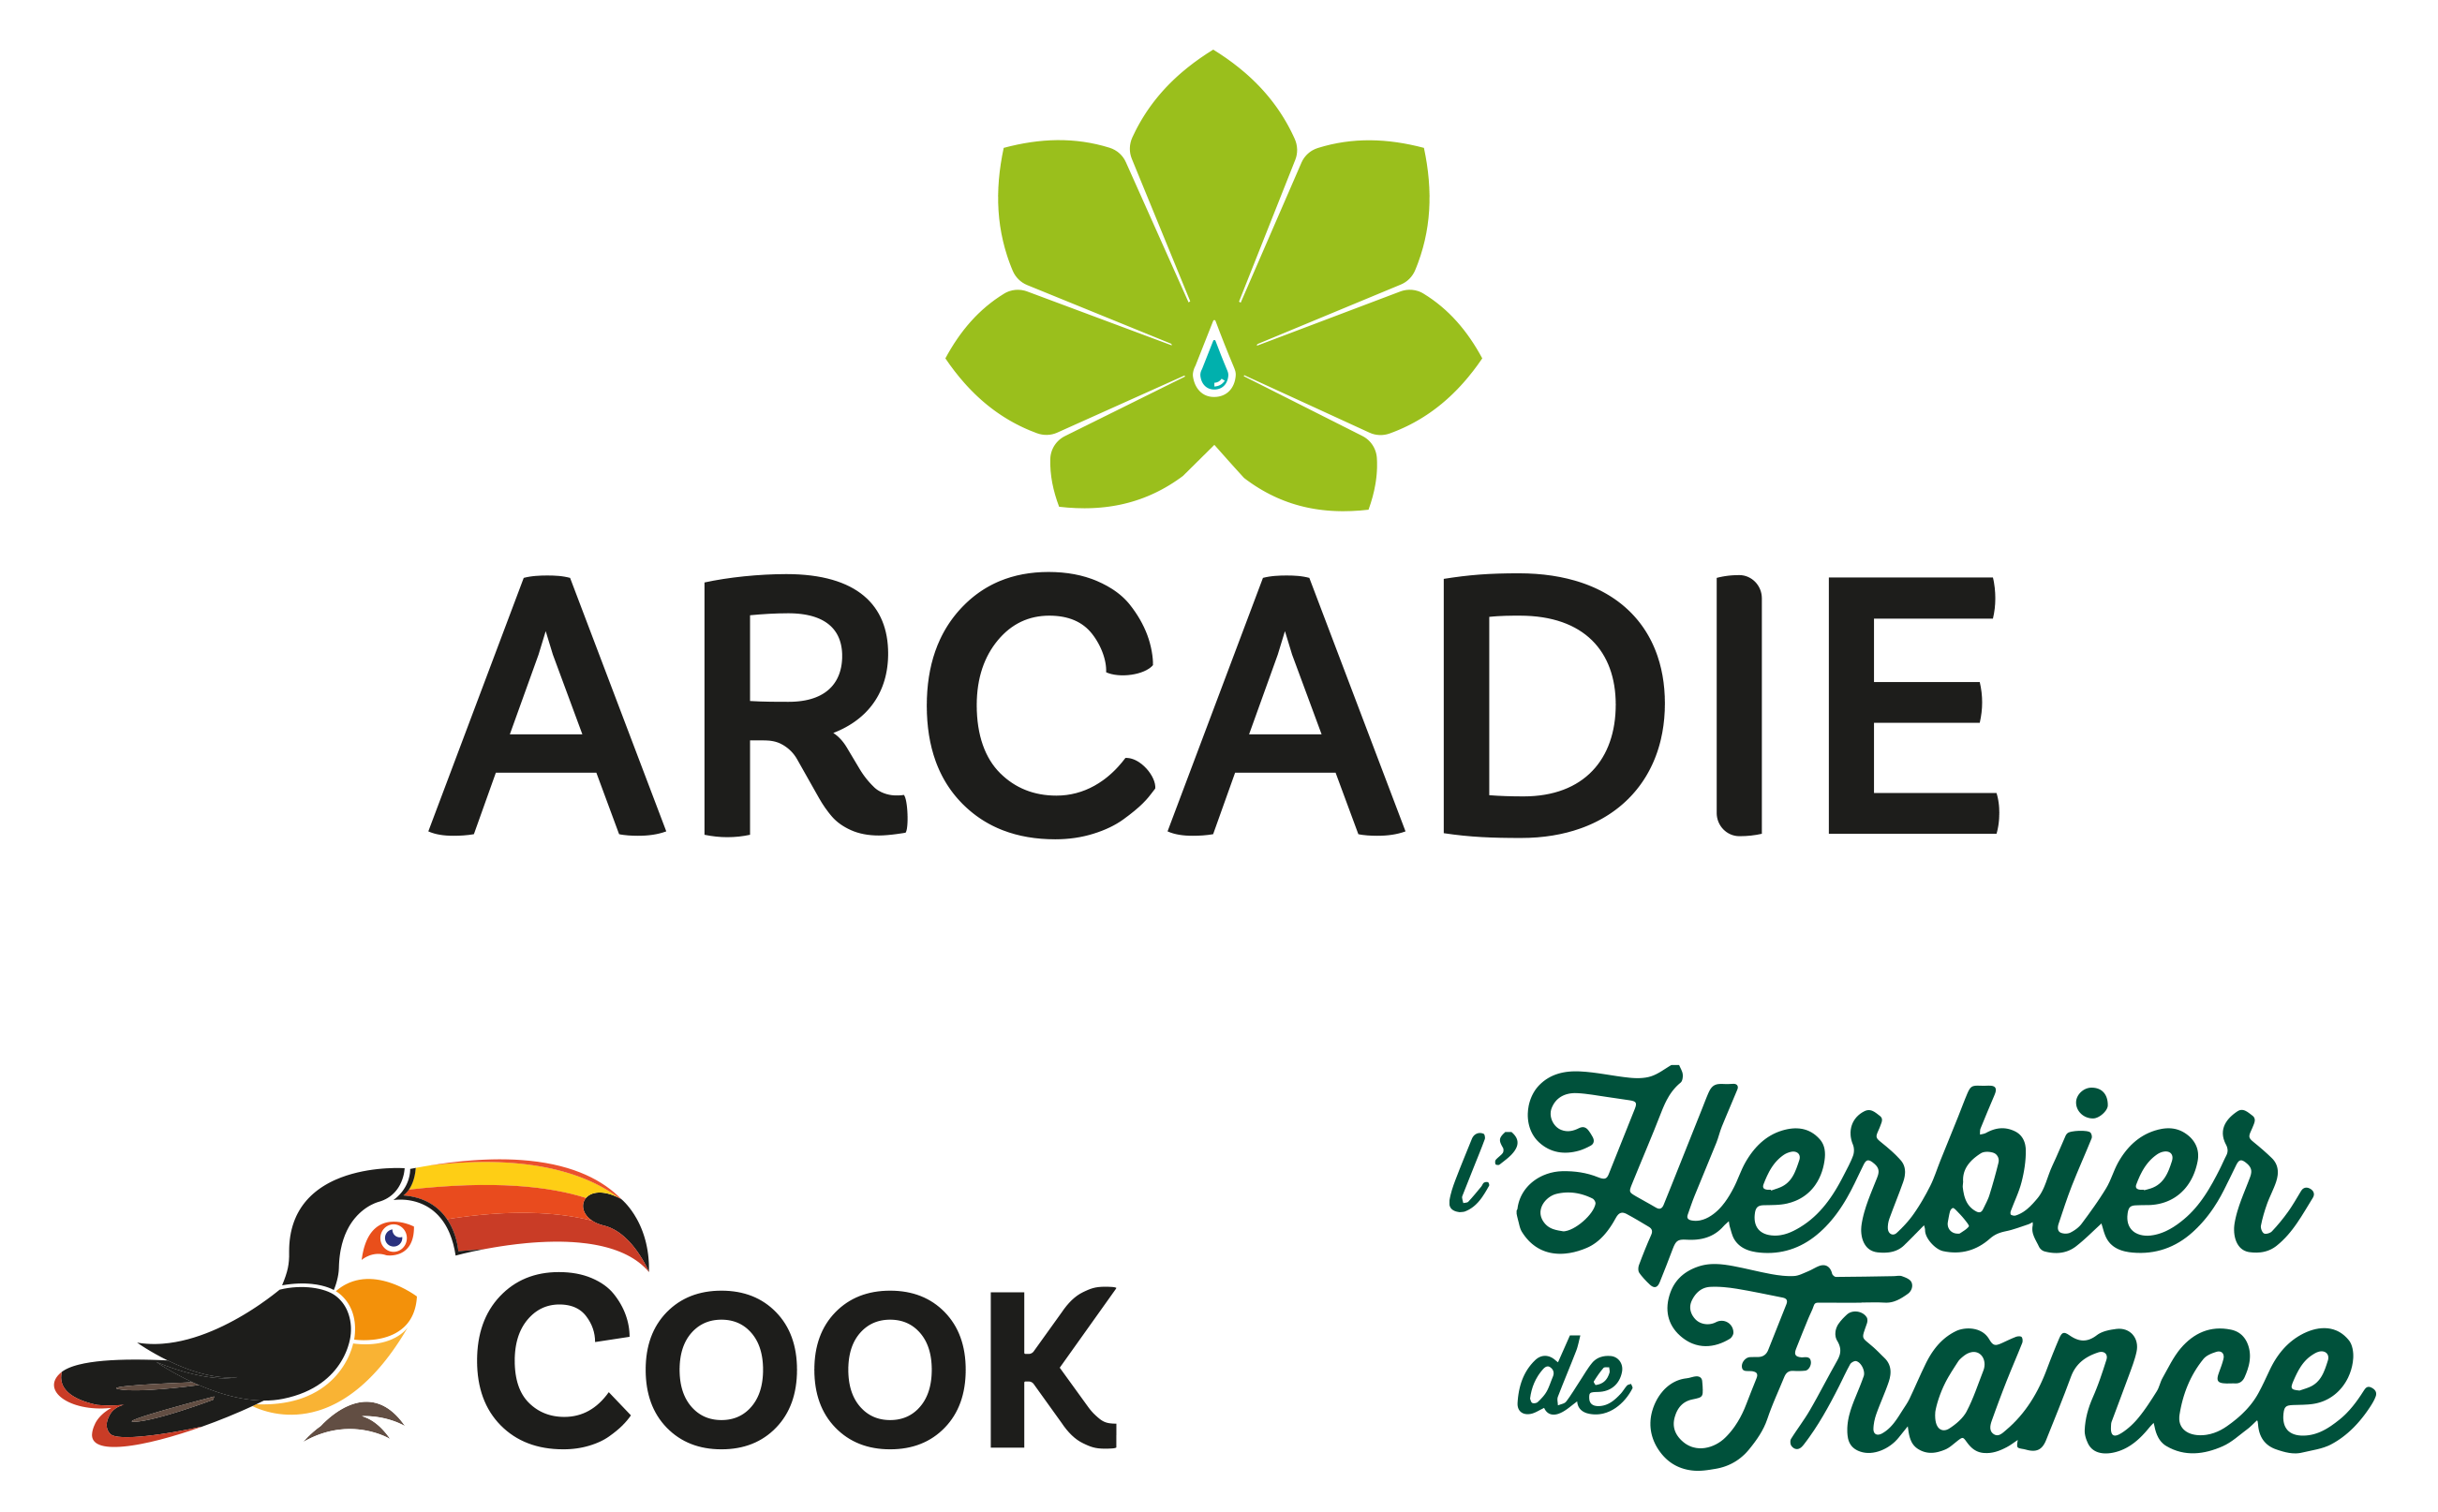 Arcadie logo 2018 Cook et L’Herbier de France sans Baseline